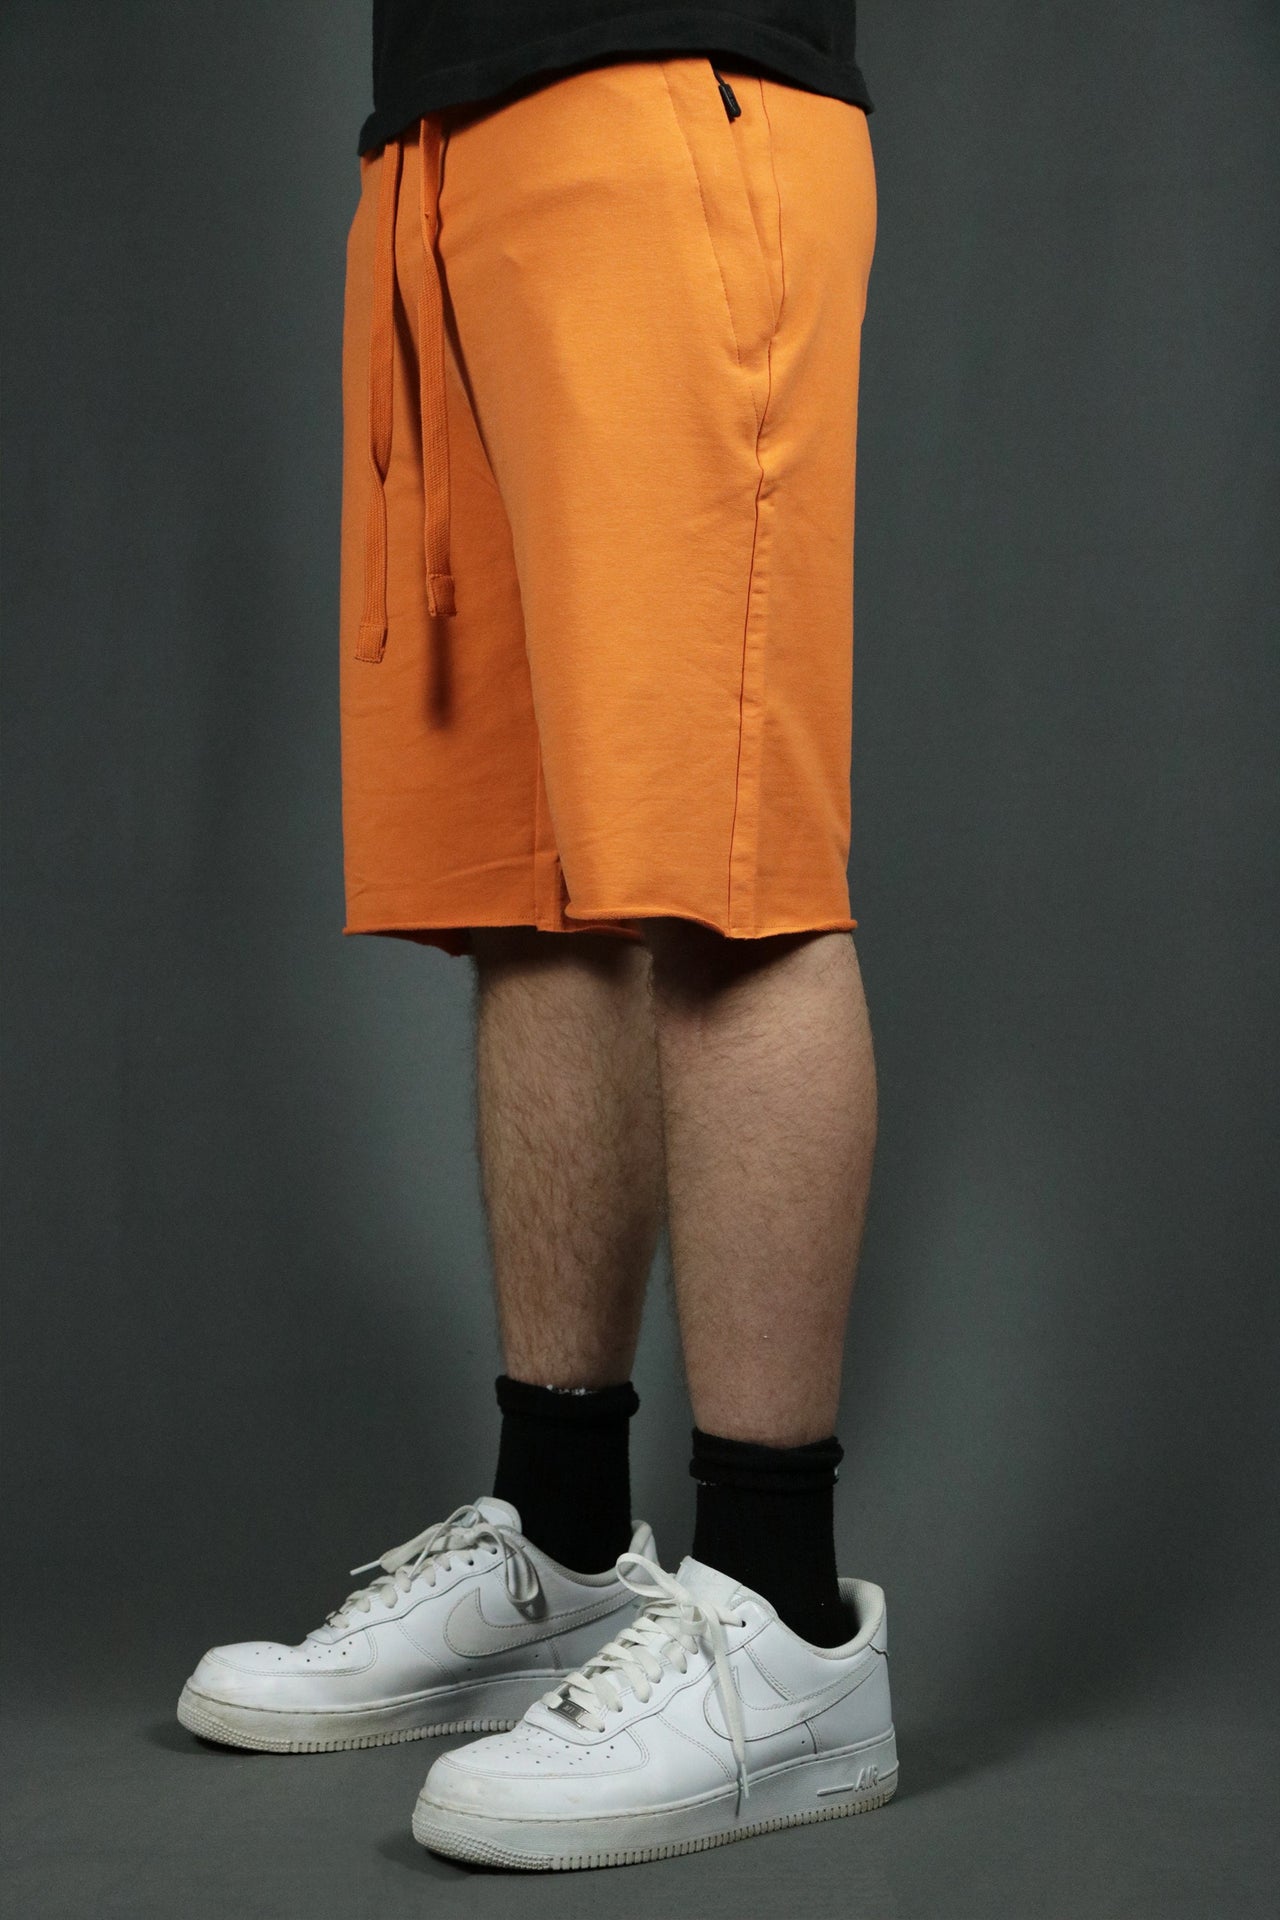 The orange mens french terry shorts by Jordan Craig.